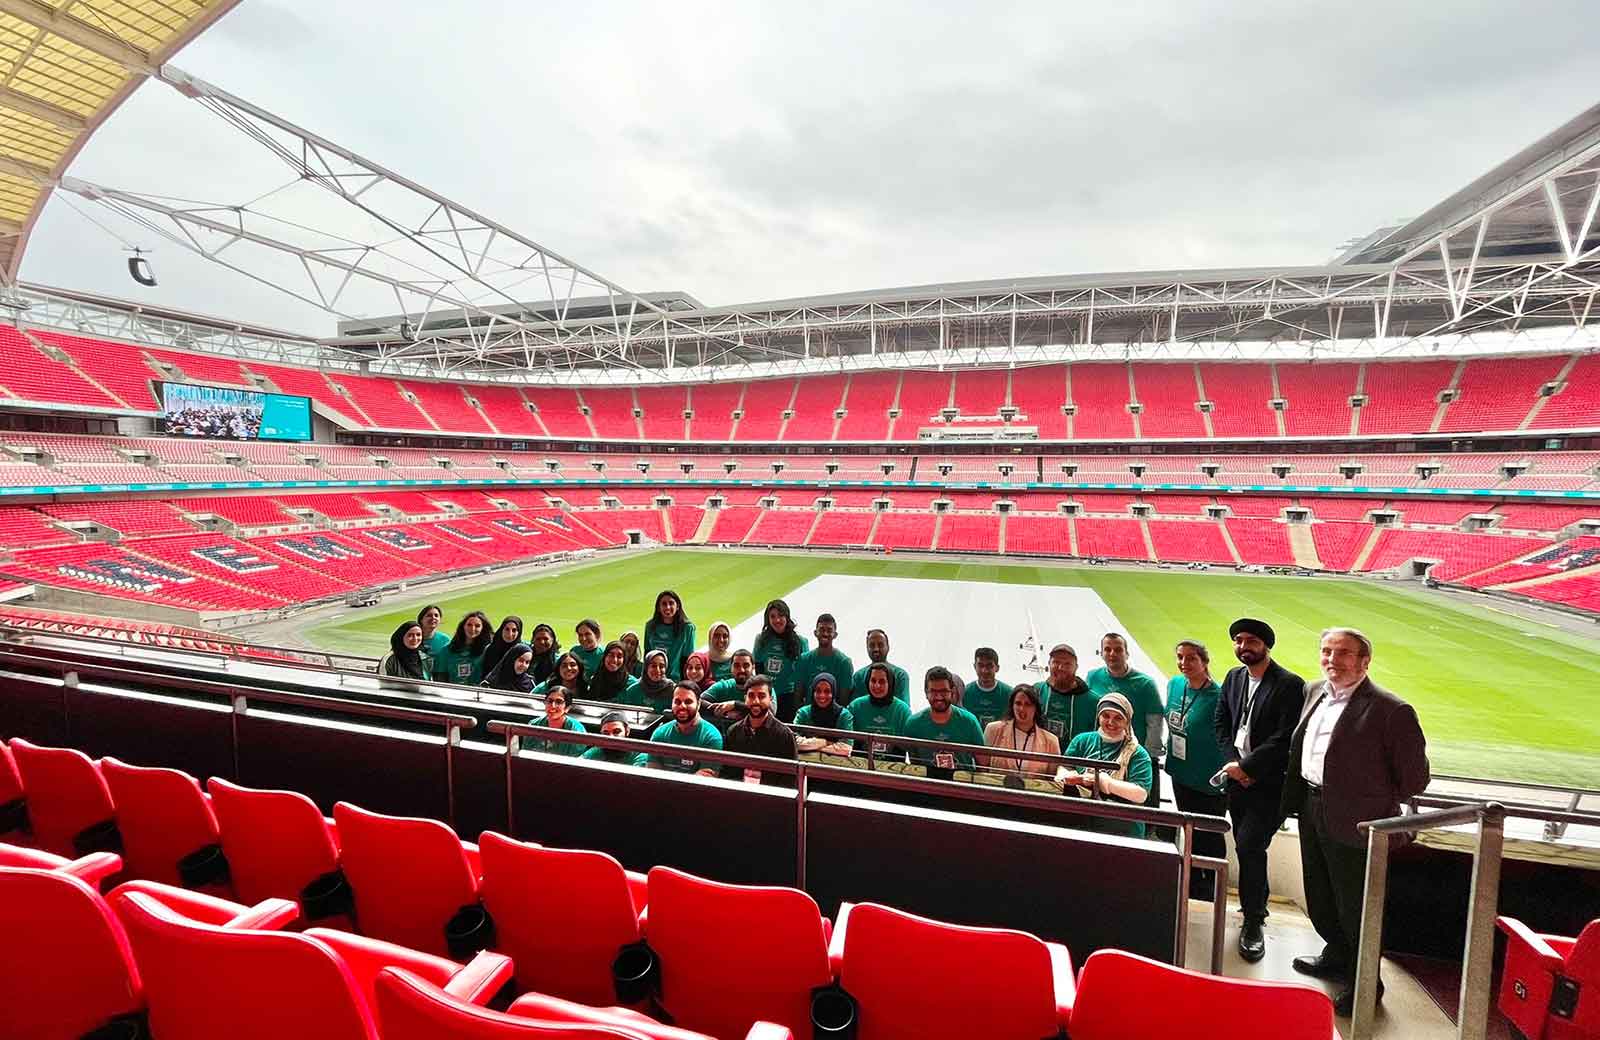 Football Association to host Vaisakhi and Ramadan events at Wembley Stadium